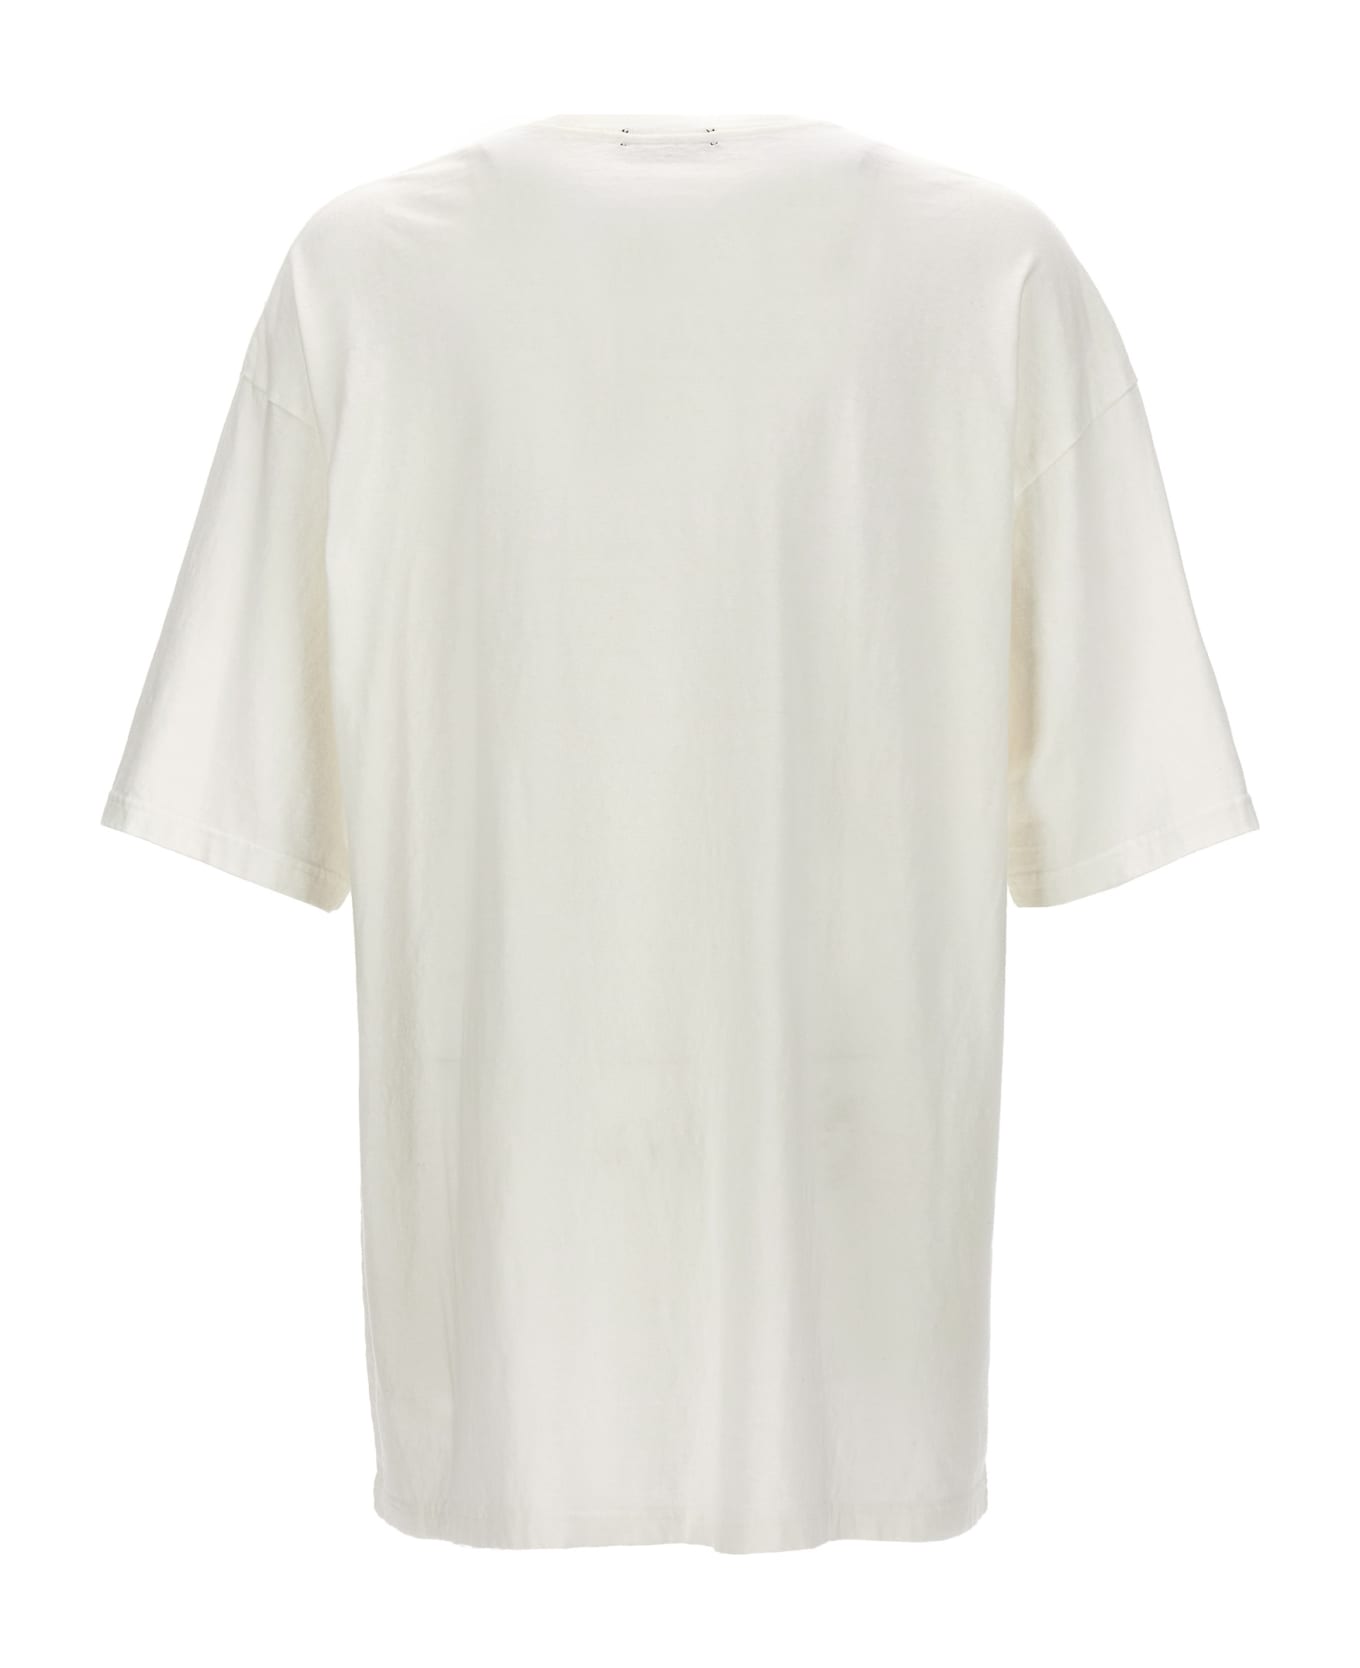 Undercover Jun Takahashi Printed T-shirt - White シャツ